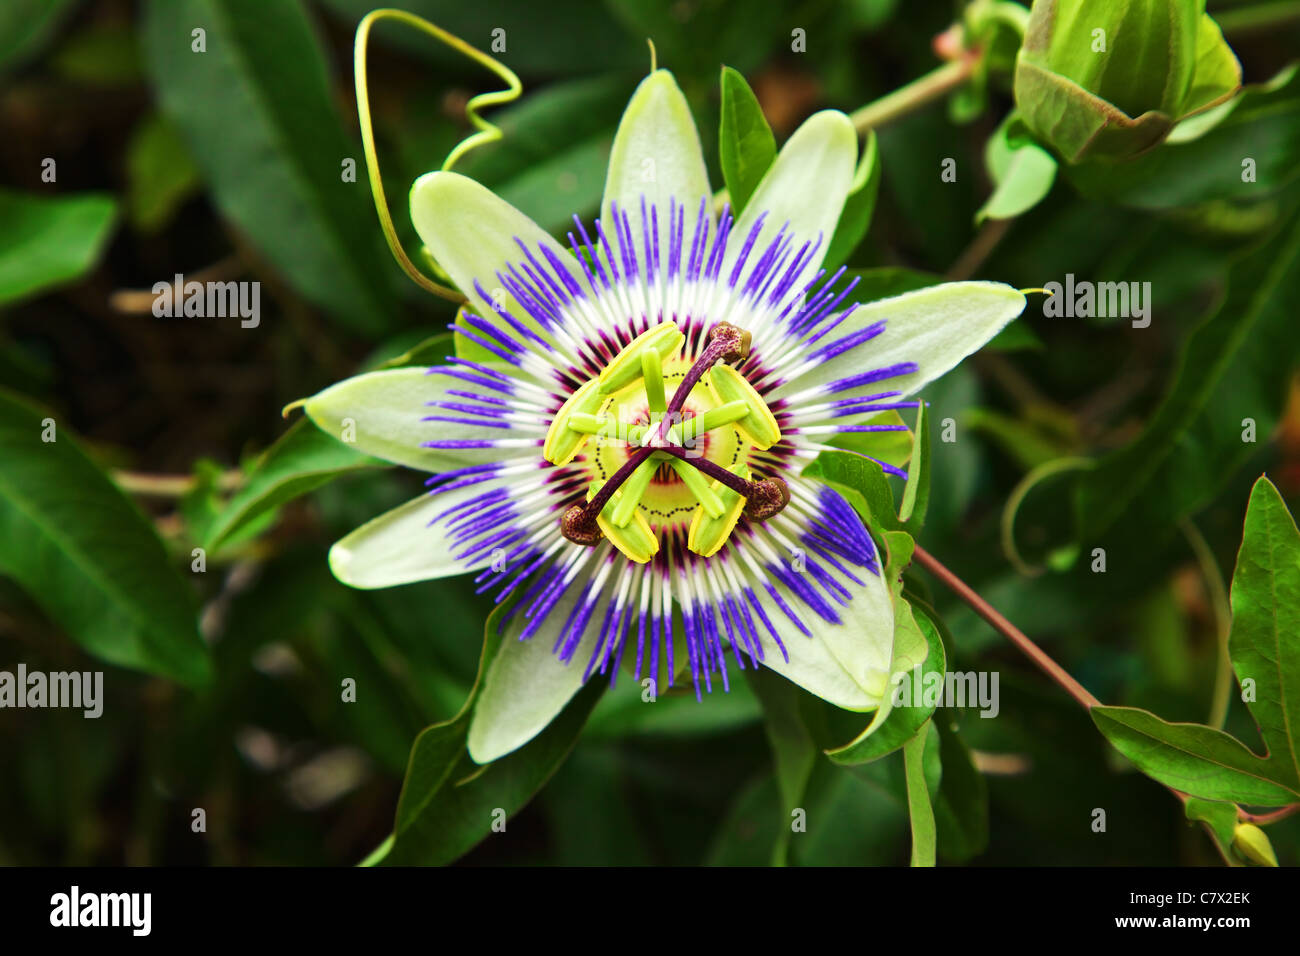 Passiflora caerulea close up image Stock Photo